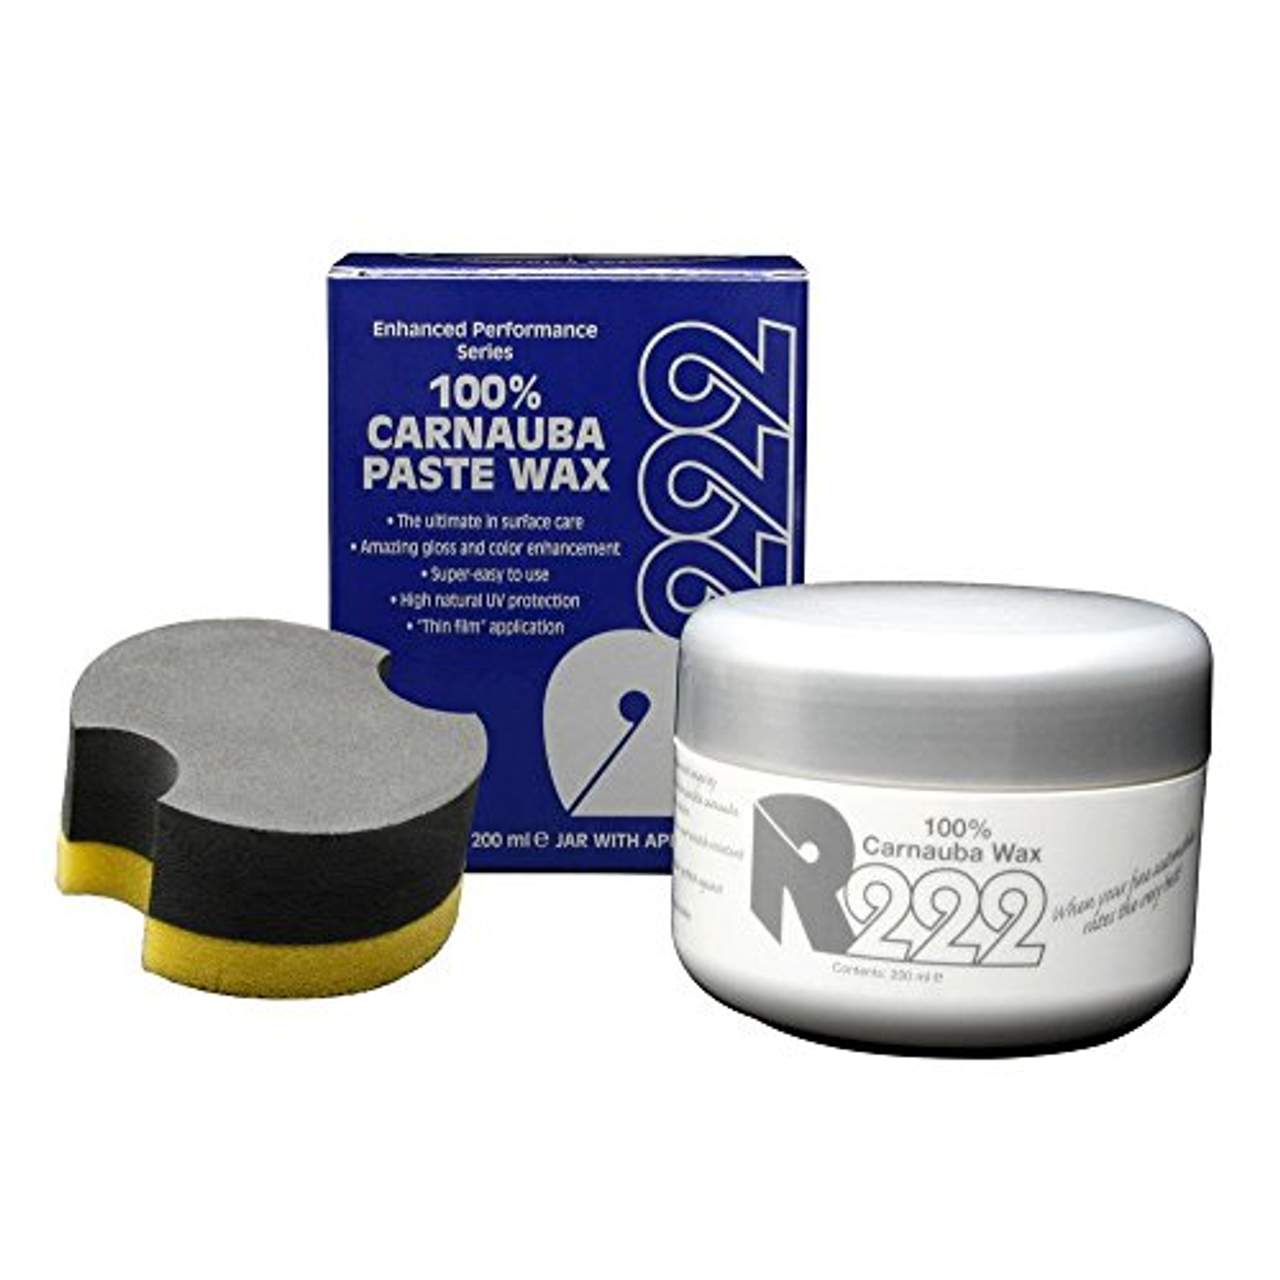 R222 100% Carnauba Paste Wax